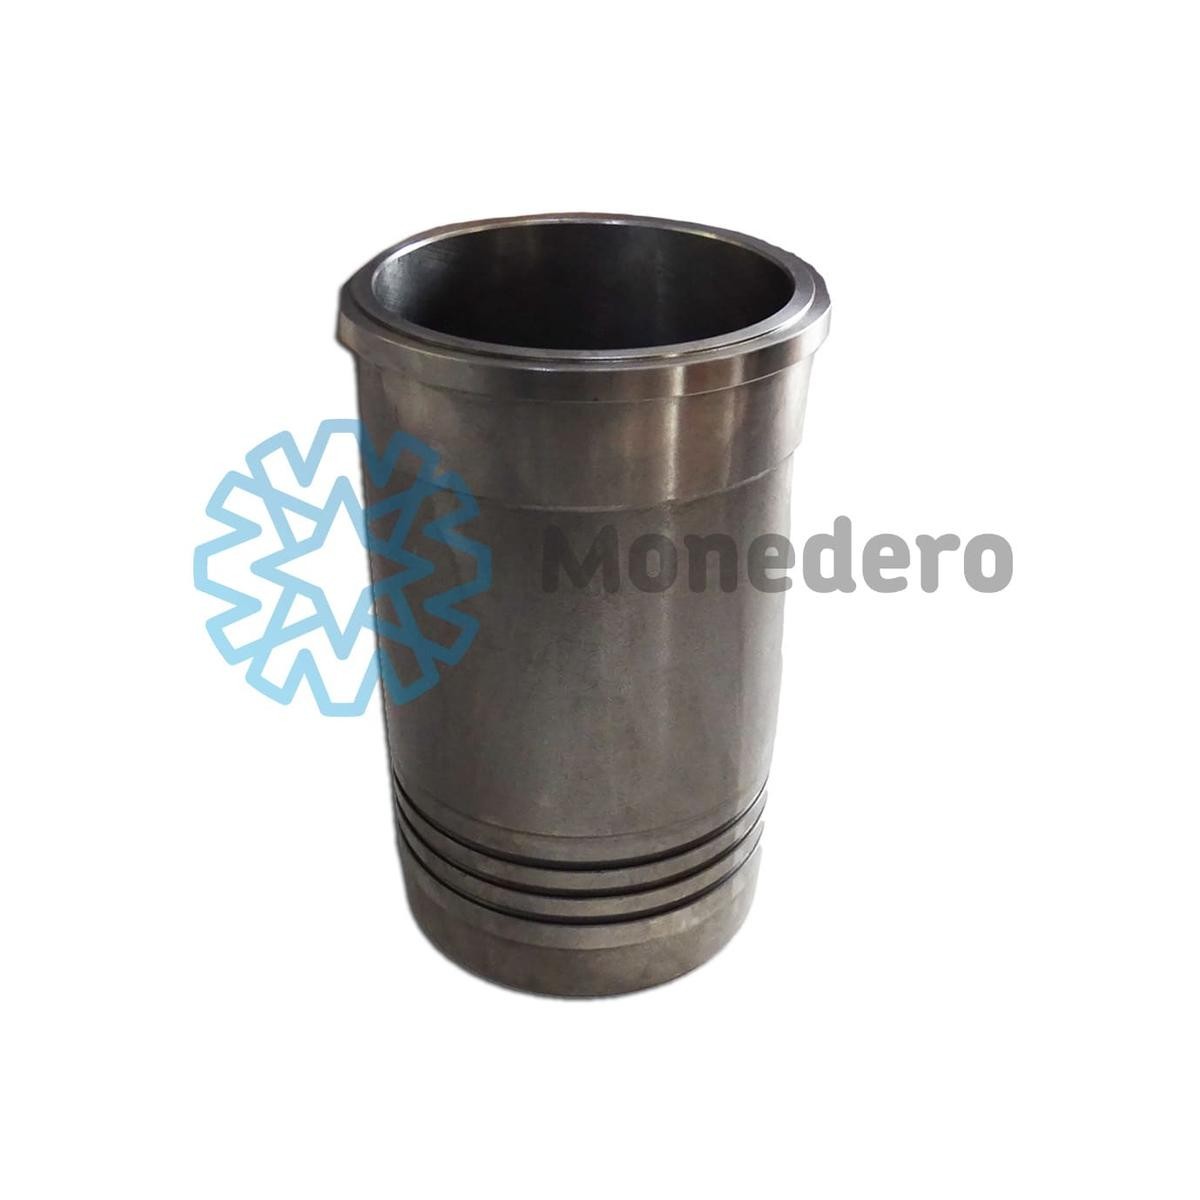 MONEDERO 30011300003 Cylinder Sleeve 504074958